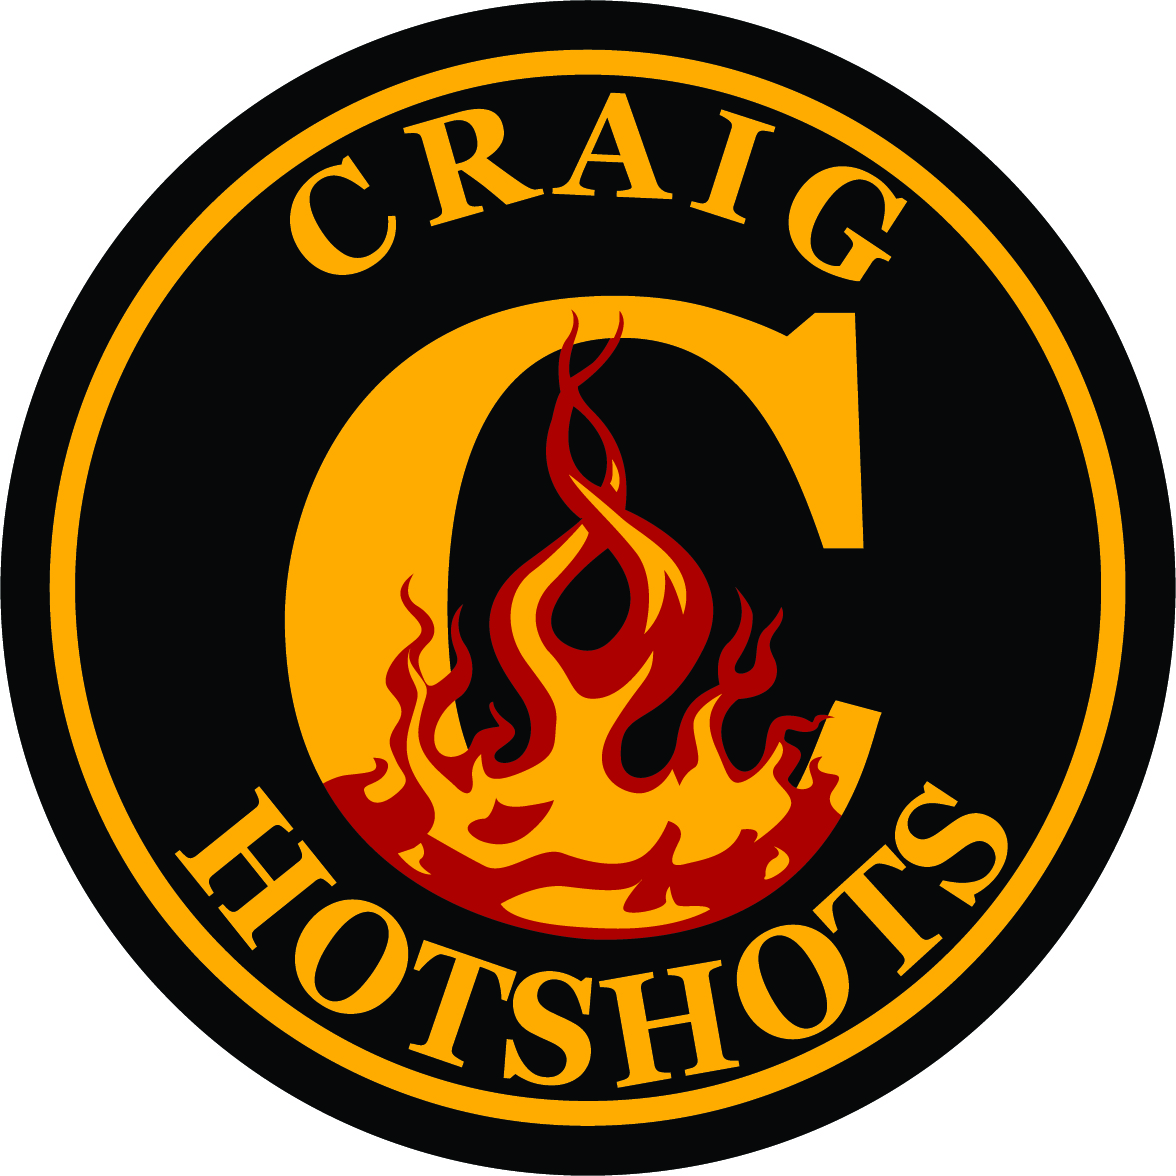 Craig Hotshot Crew